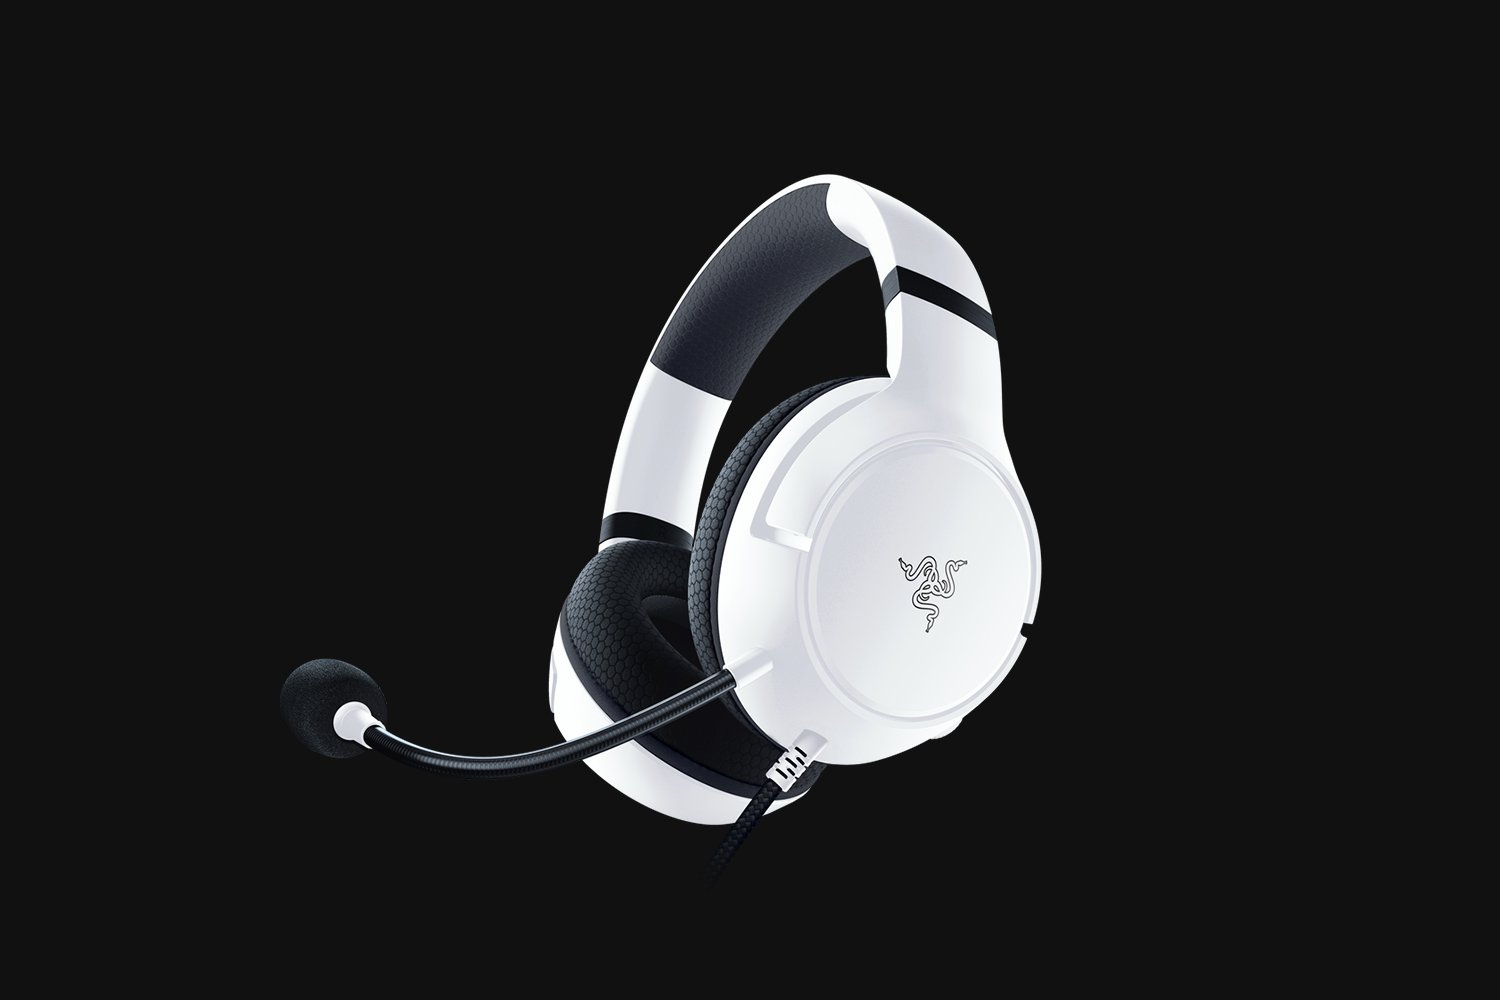 Razer Kaira X for Wired Headset for Xbox Series X|S